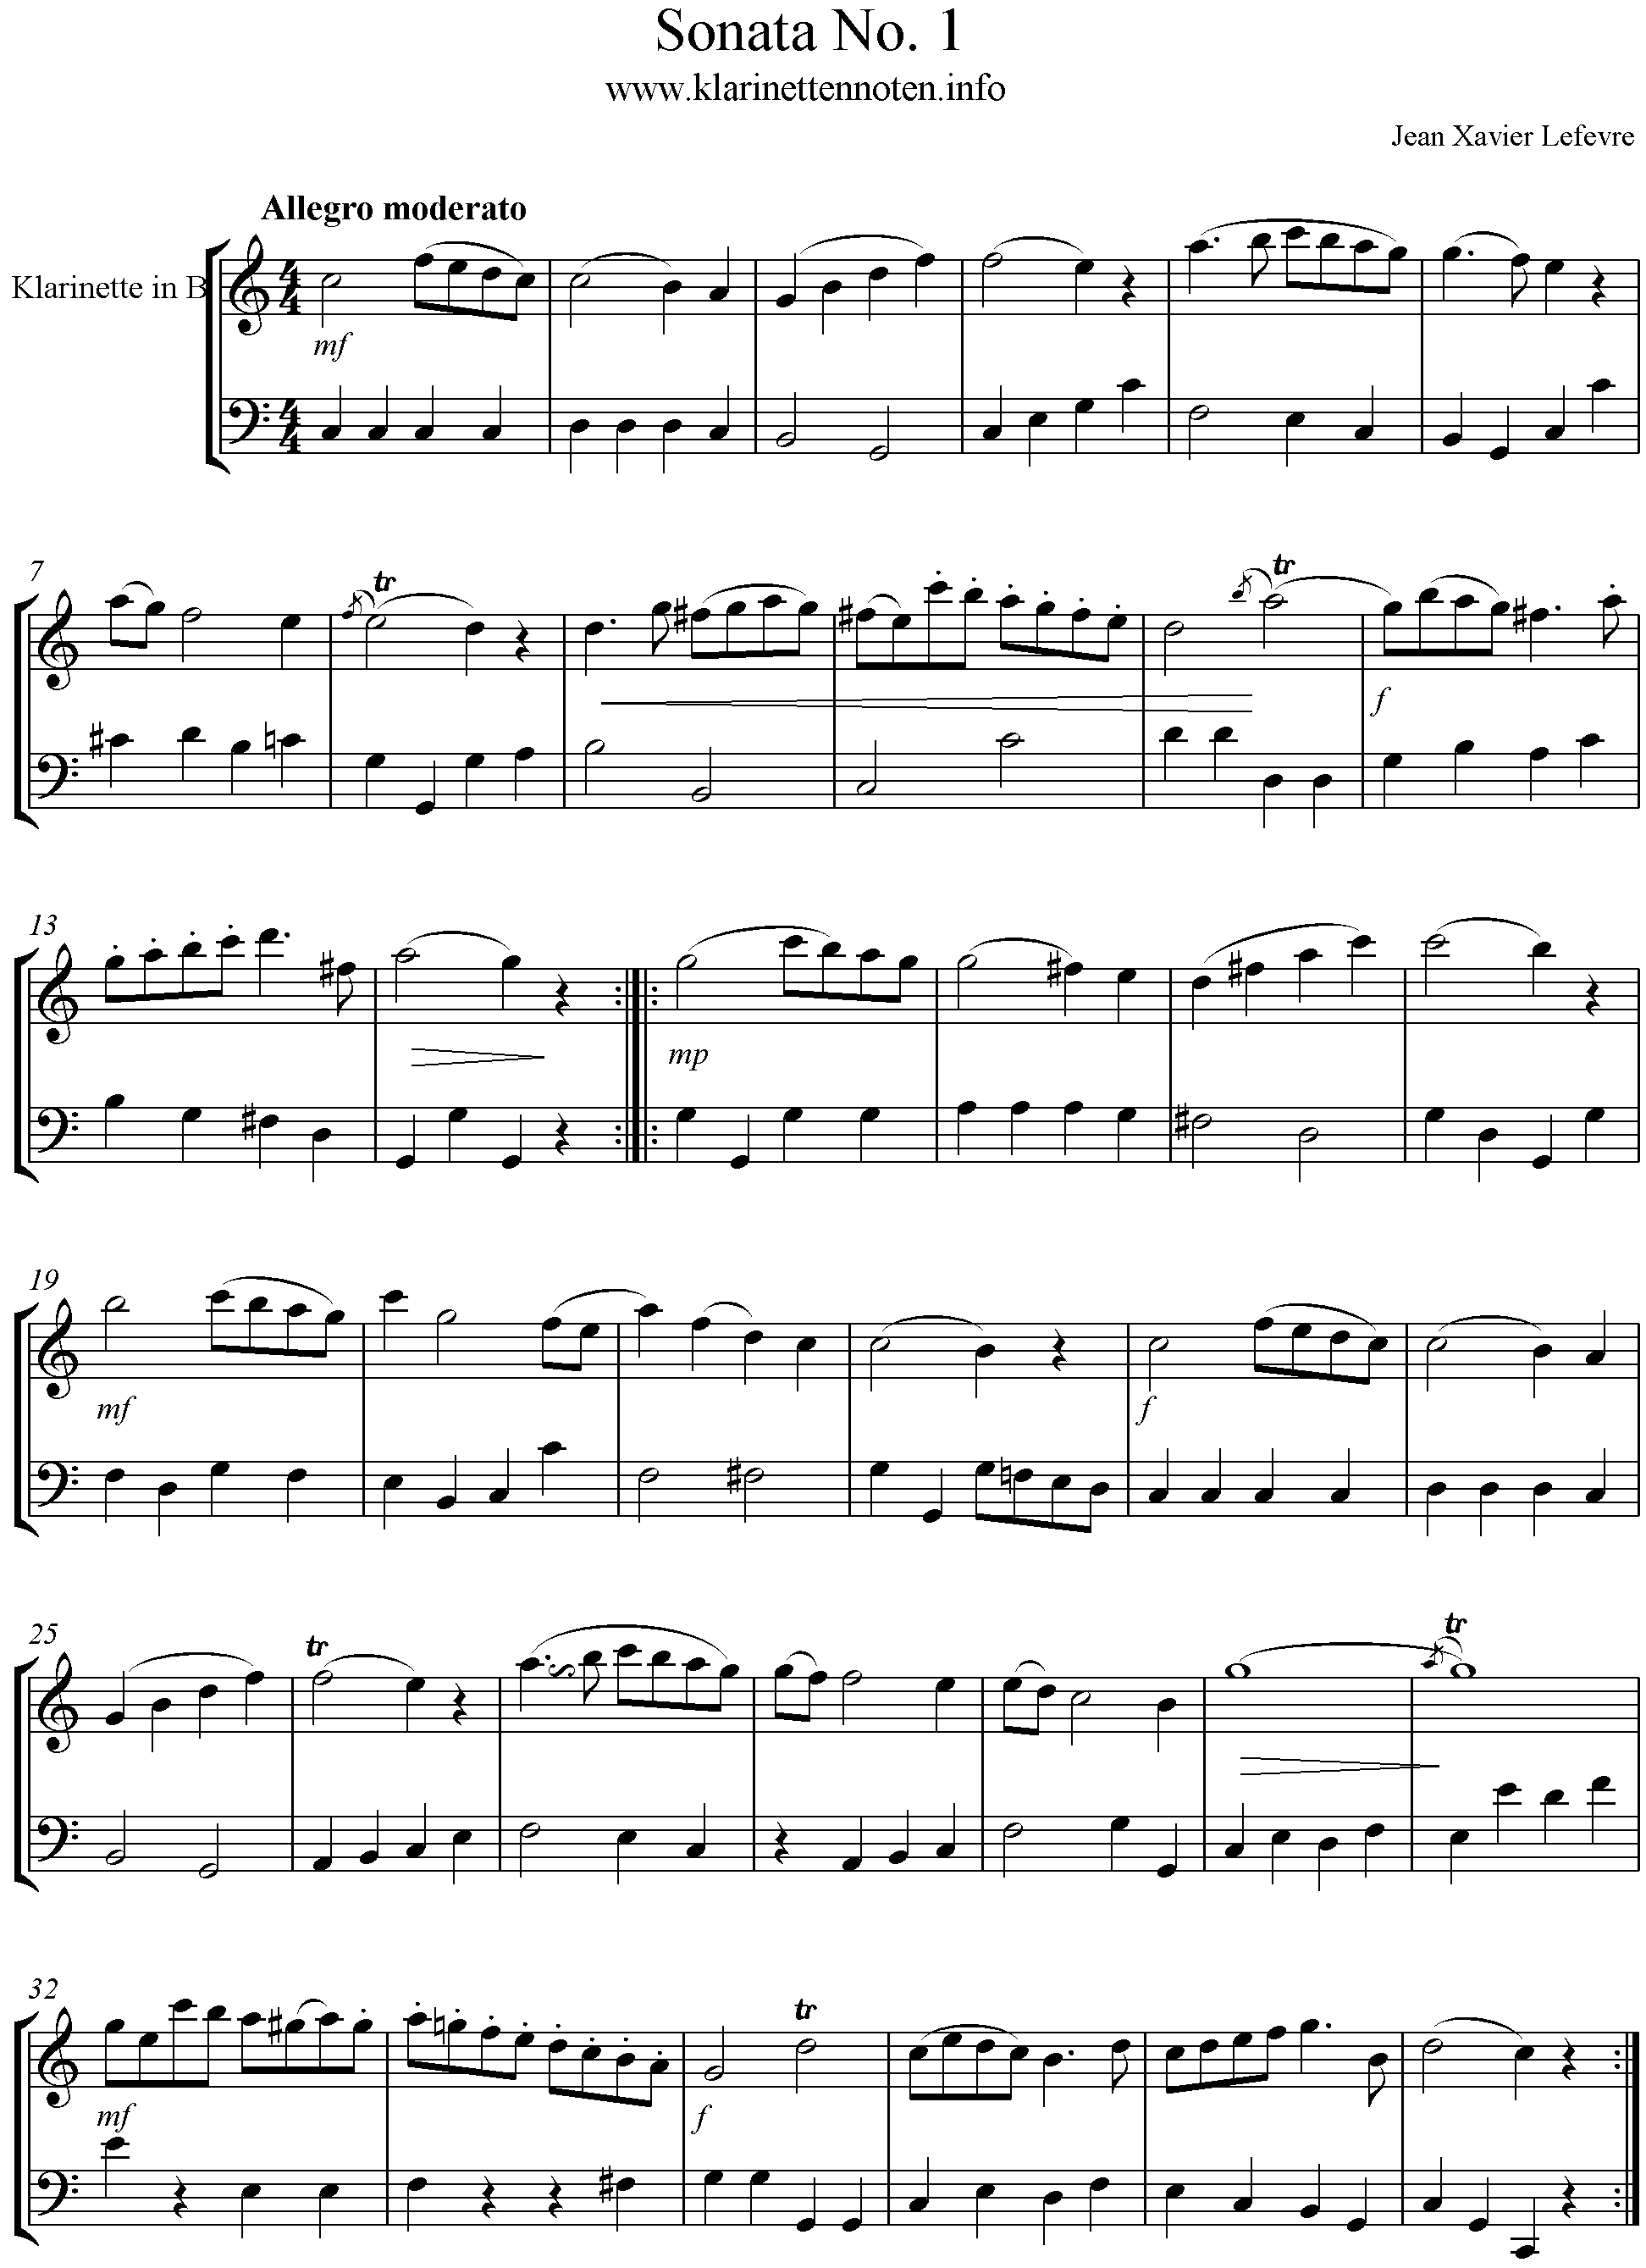 Lefevre Sonata 1-Allegro Moderato